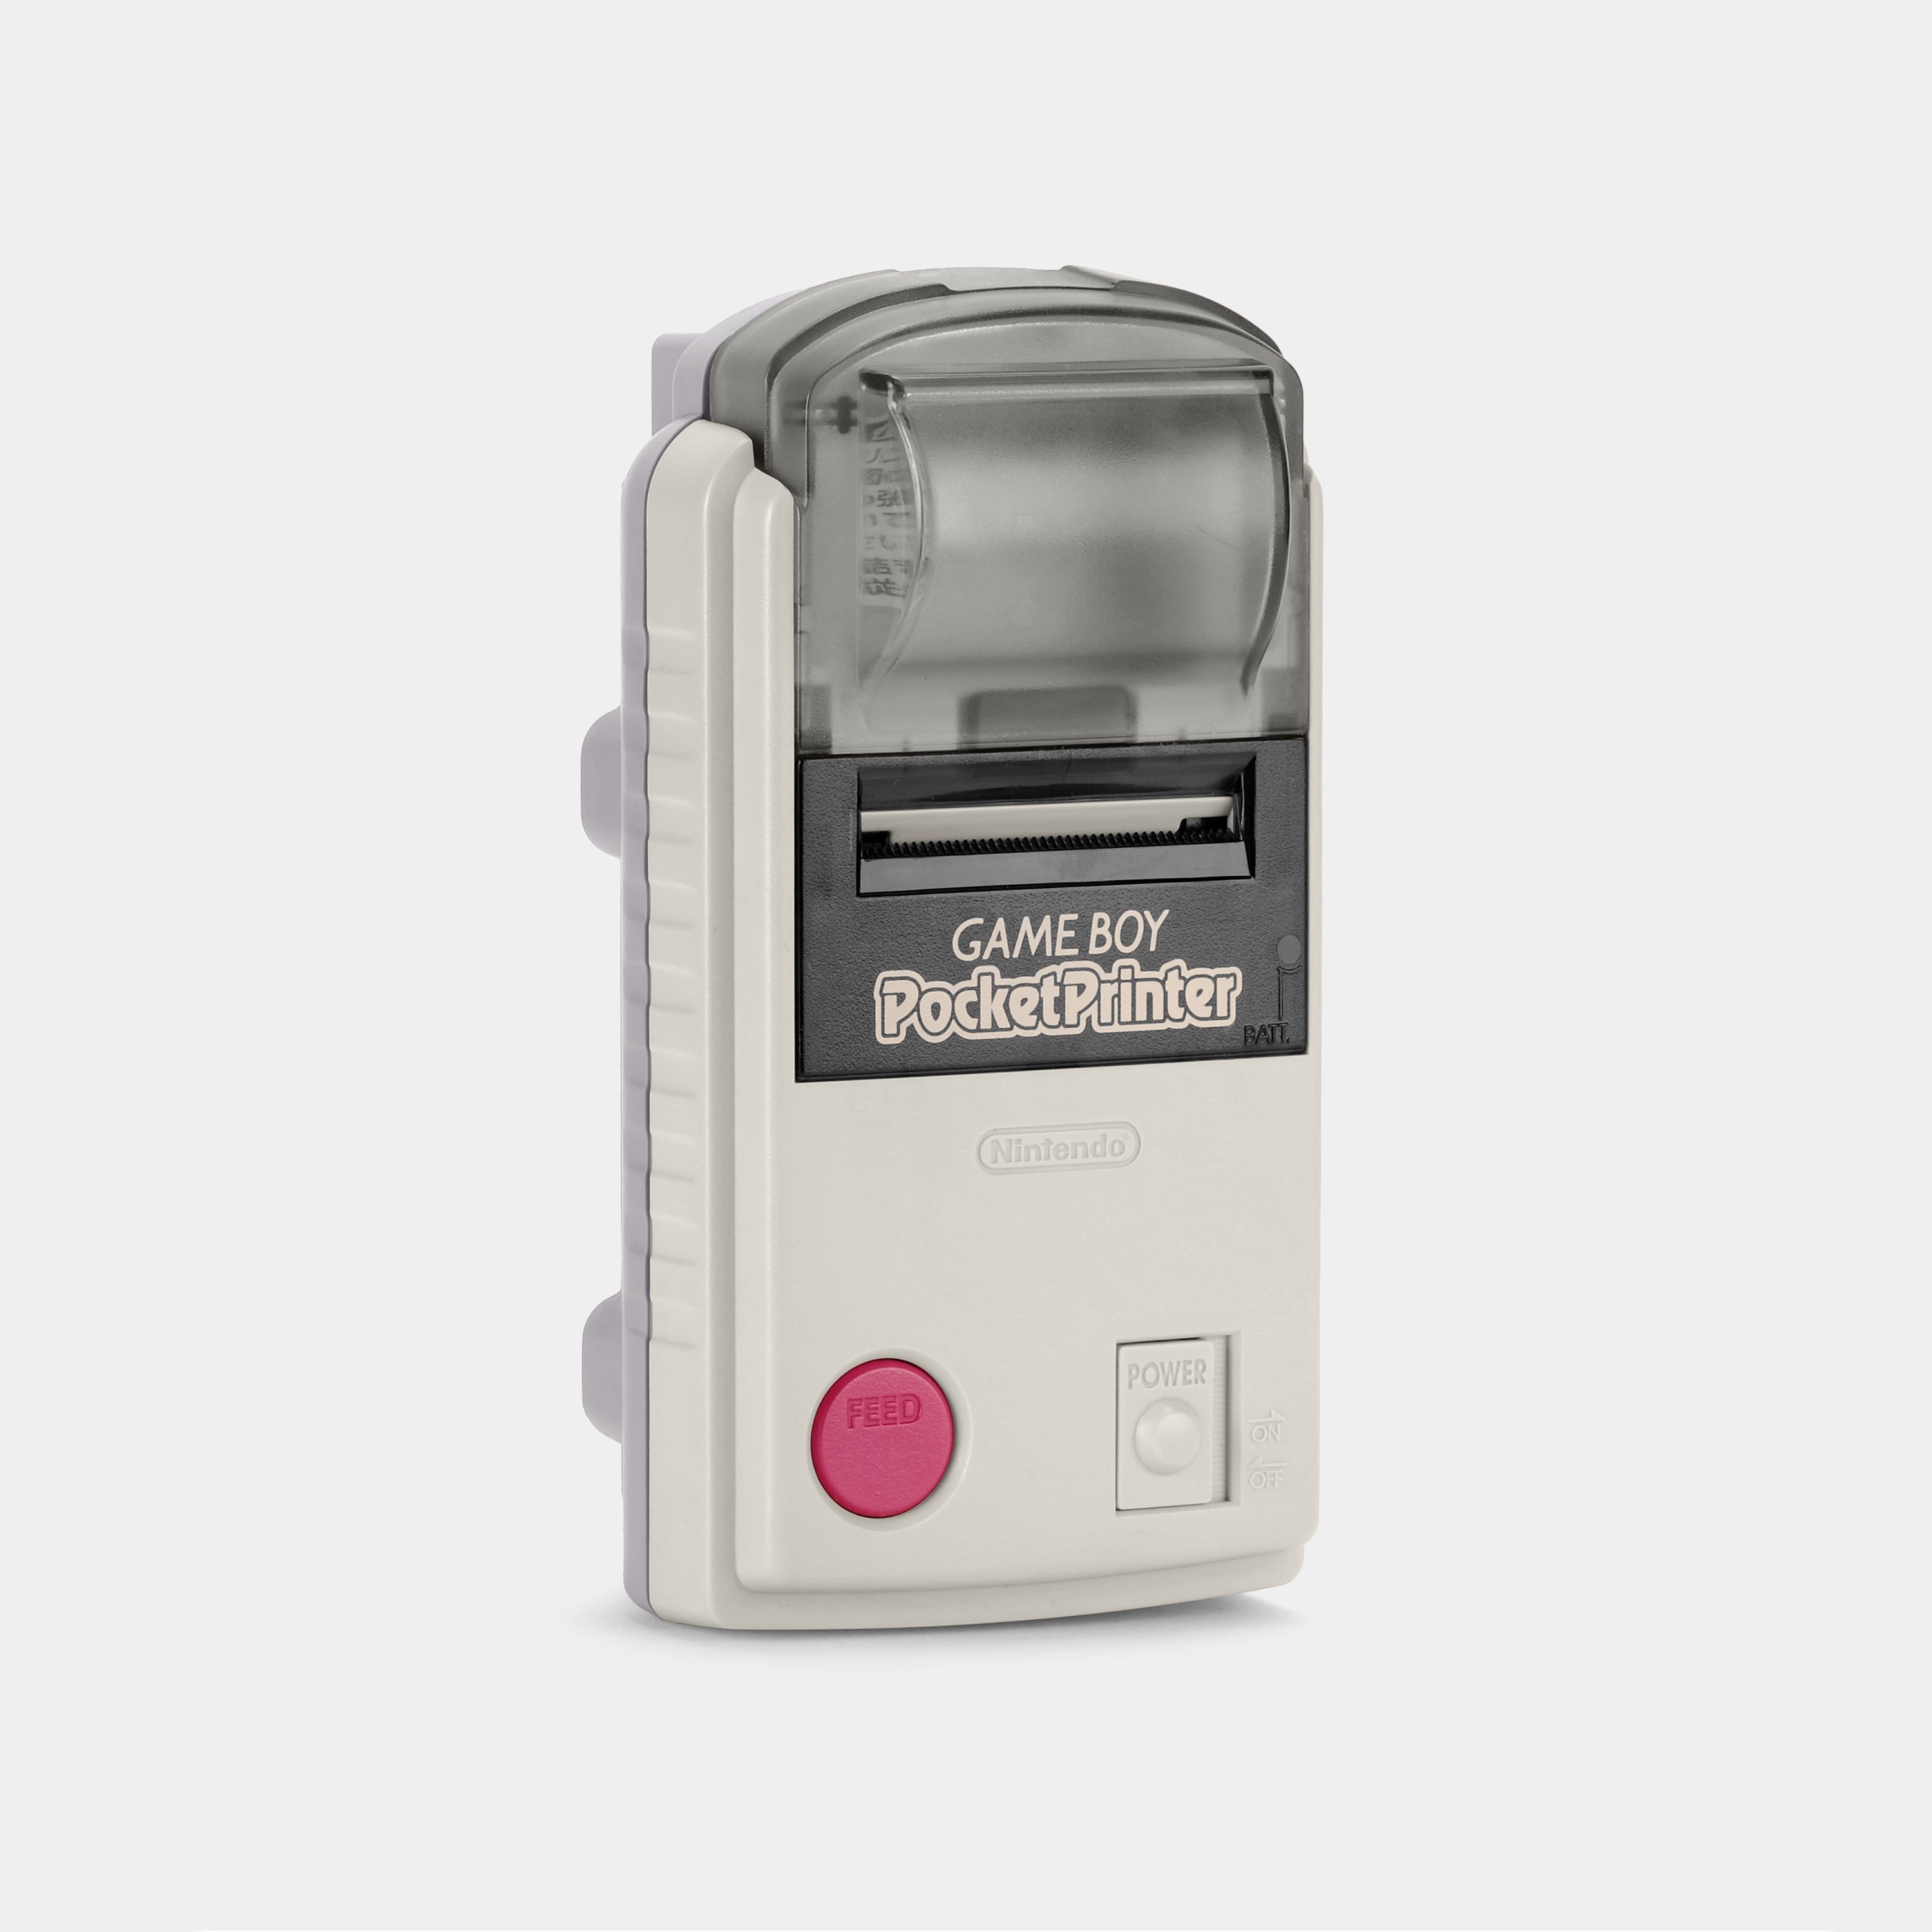 Game Boy Pocket Printer (Japanese) (B-Grade)